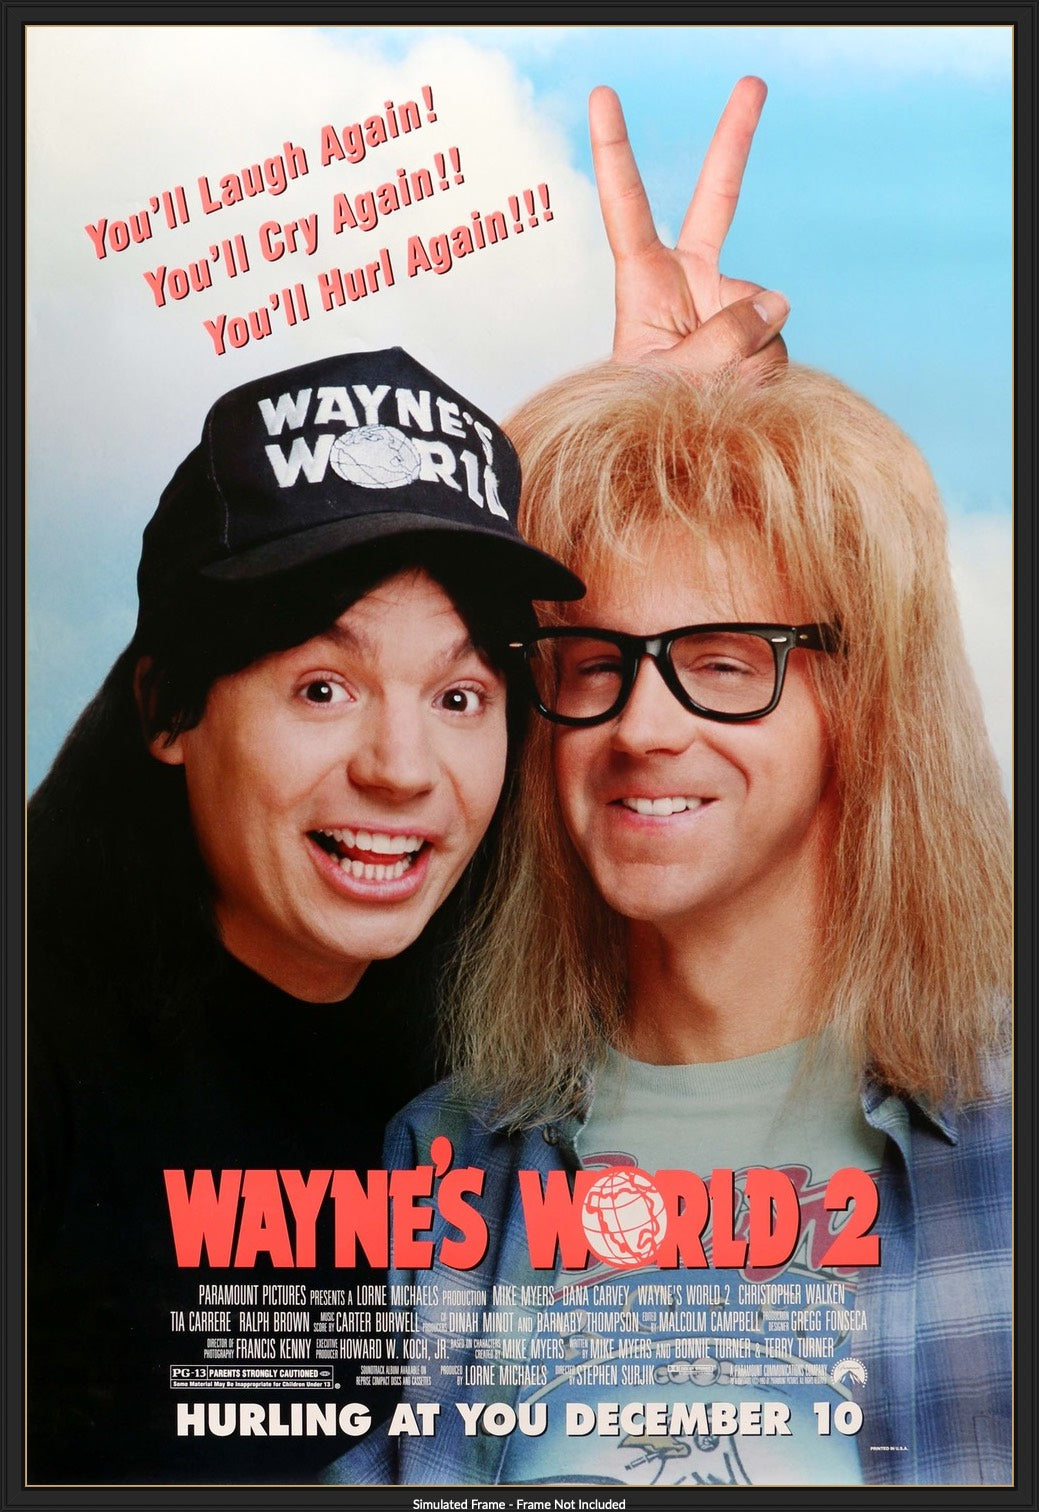 Wayne's World 2 (1993) original movie poster for sale at Original Film Art